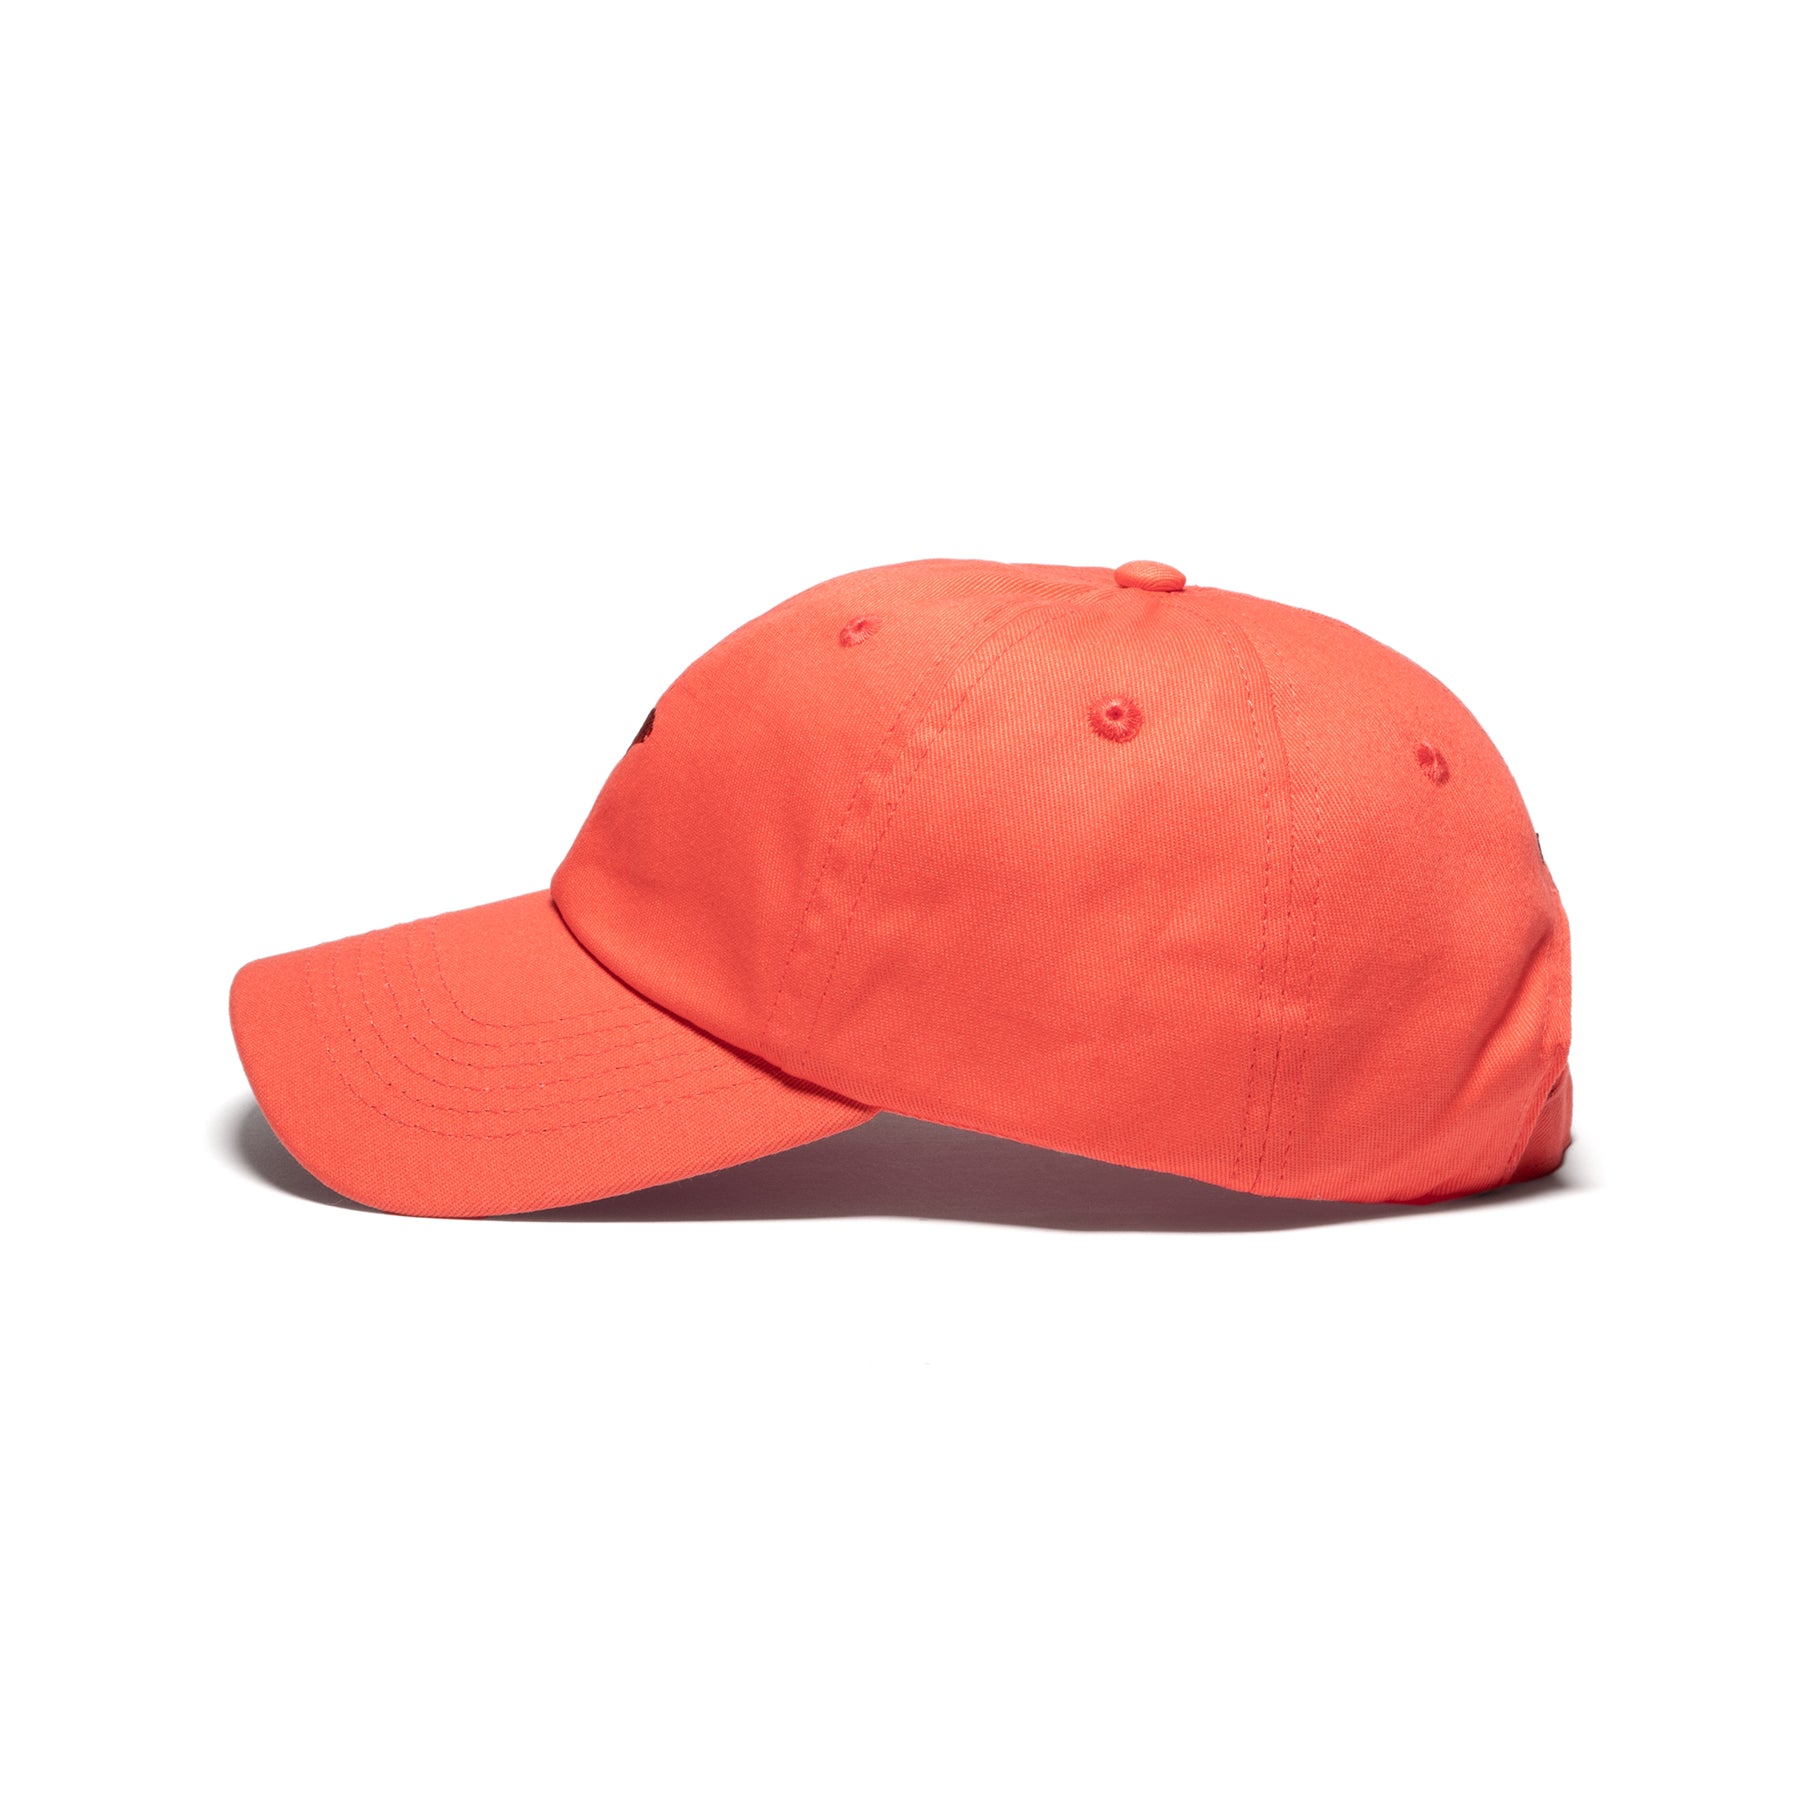 Bahco Tools Orange Fish Logo design Classic T-Shirt Baseball Cap